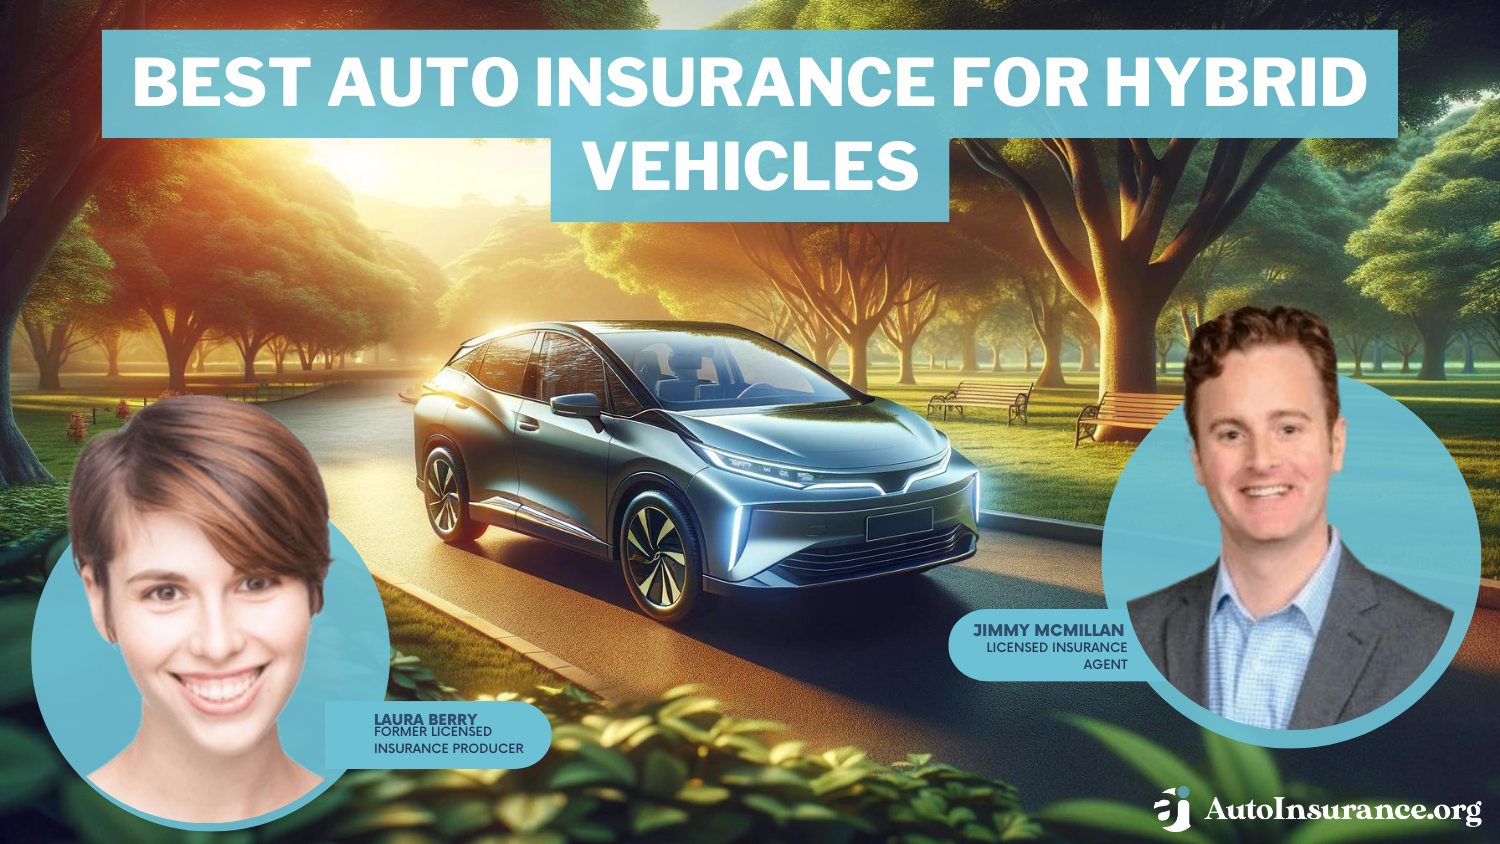 best auto insurance for hybrid vehicles - Allstate, State Farm, Progressive